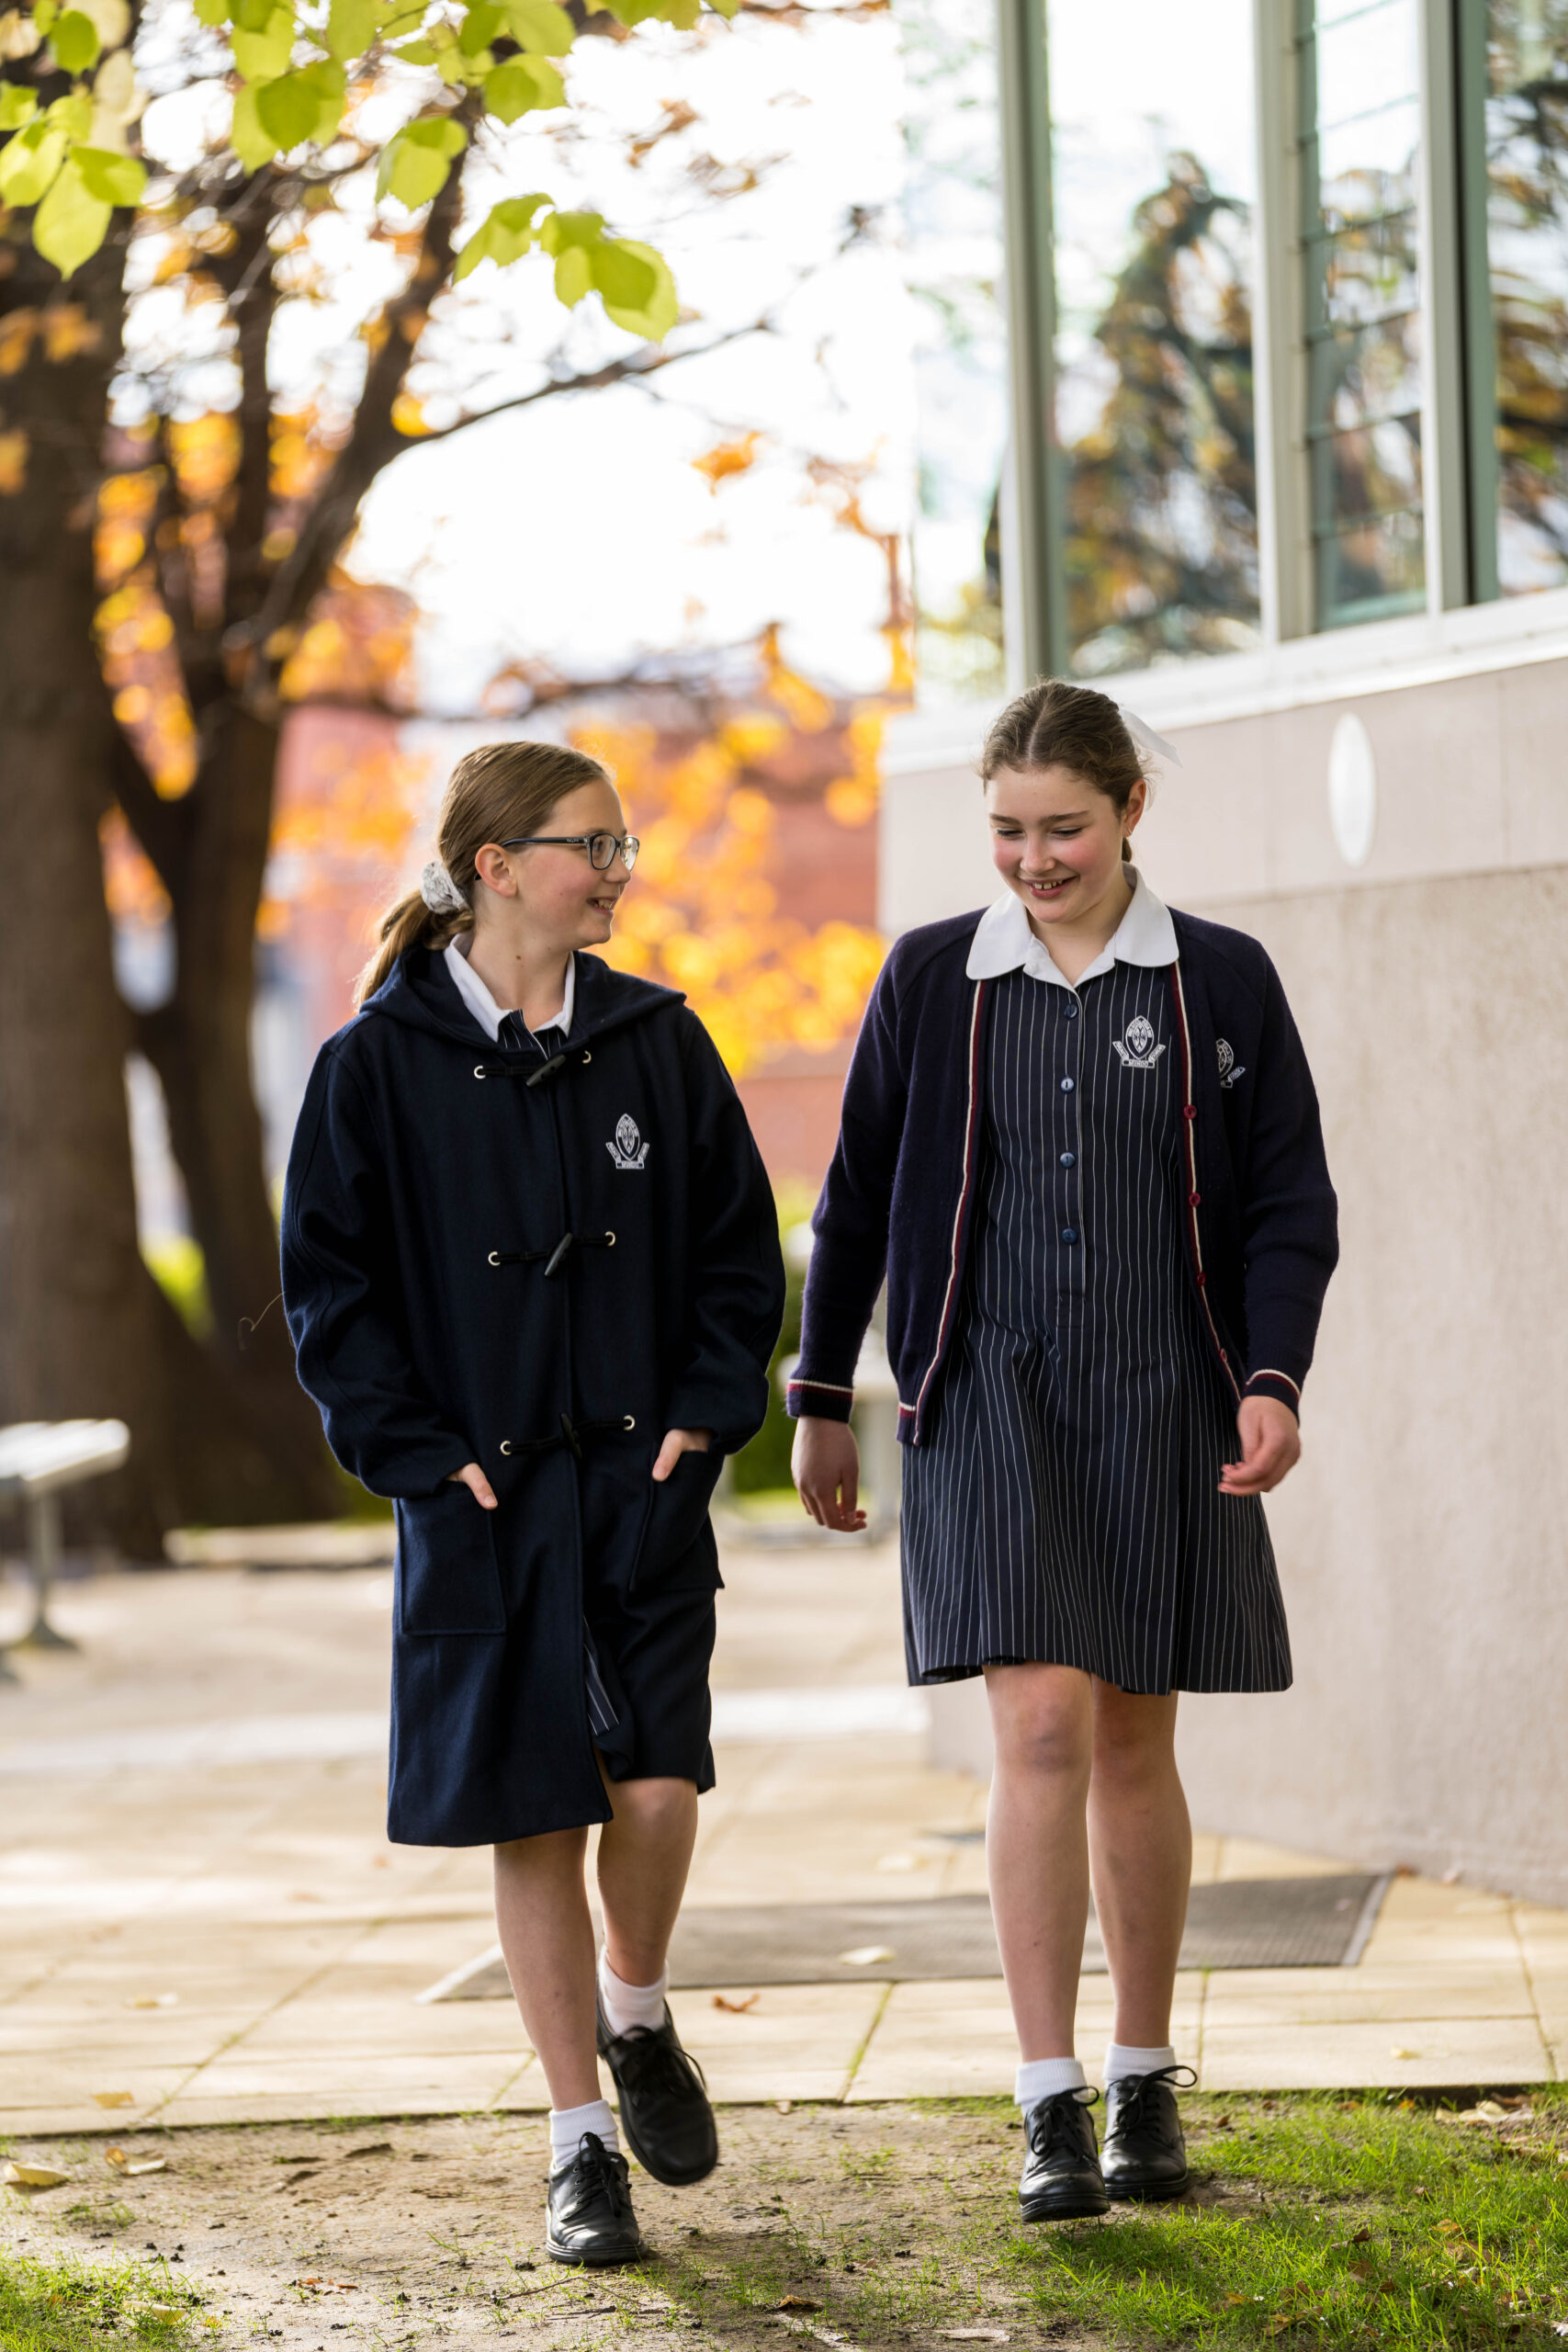 Middle School students walking in school grounds